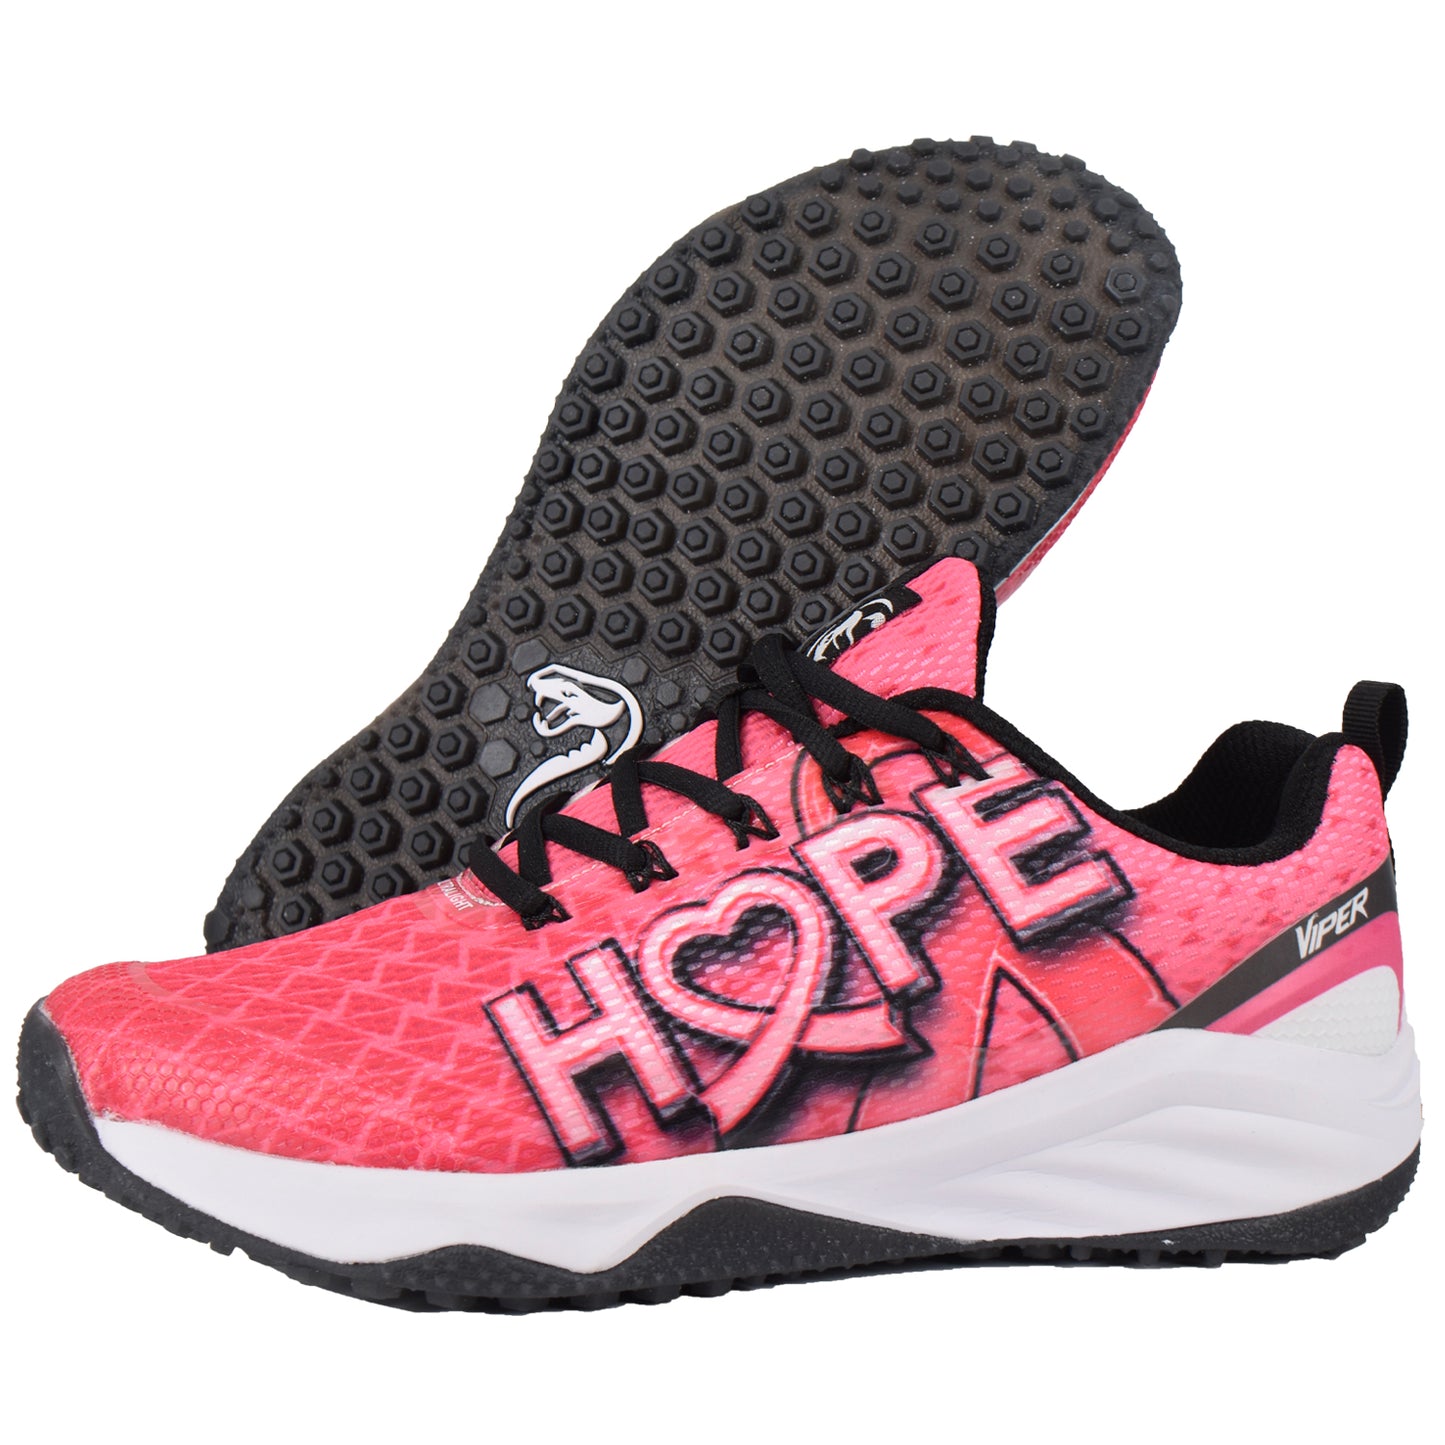 Viper Ultralight Turf Shoe (Hope)